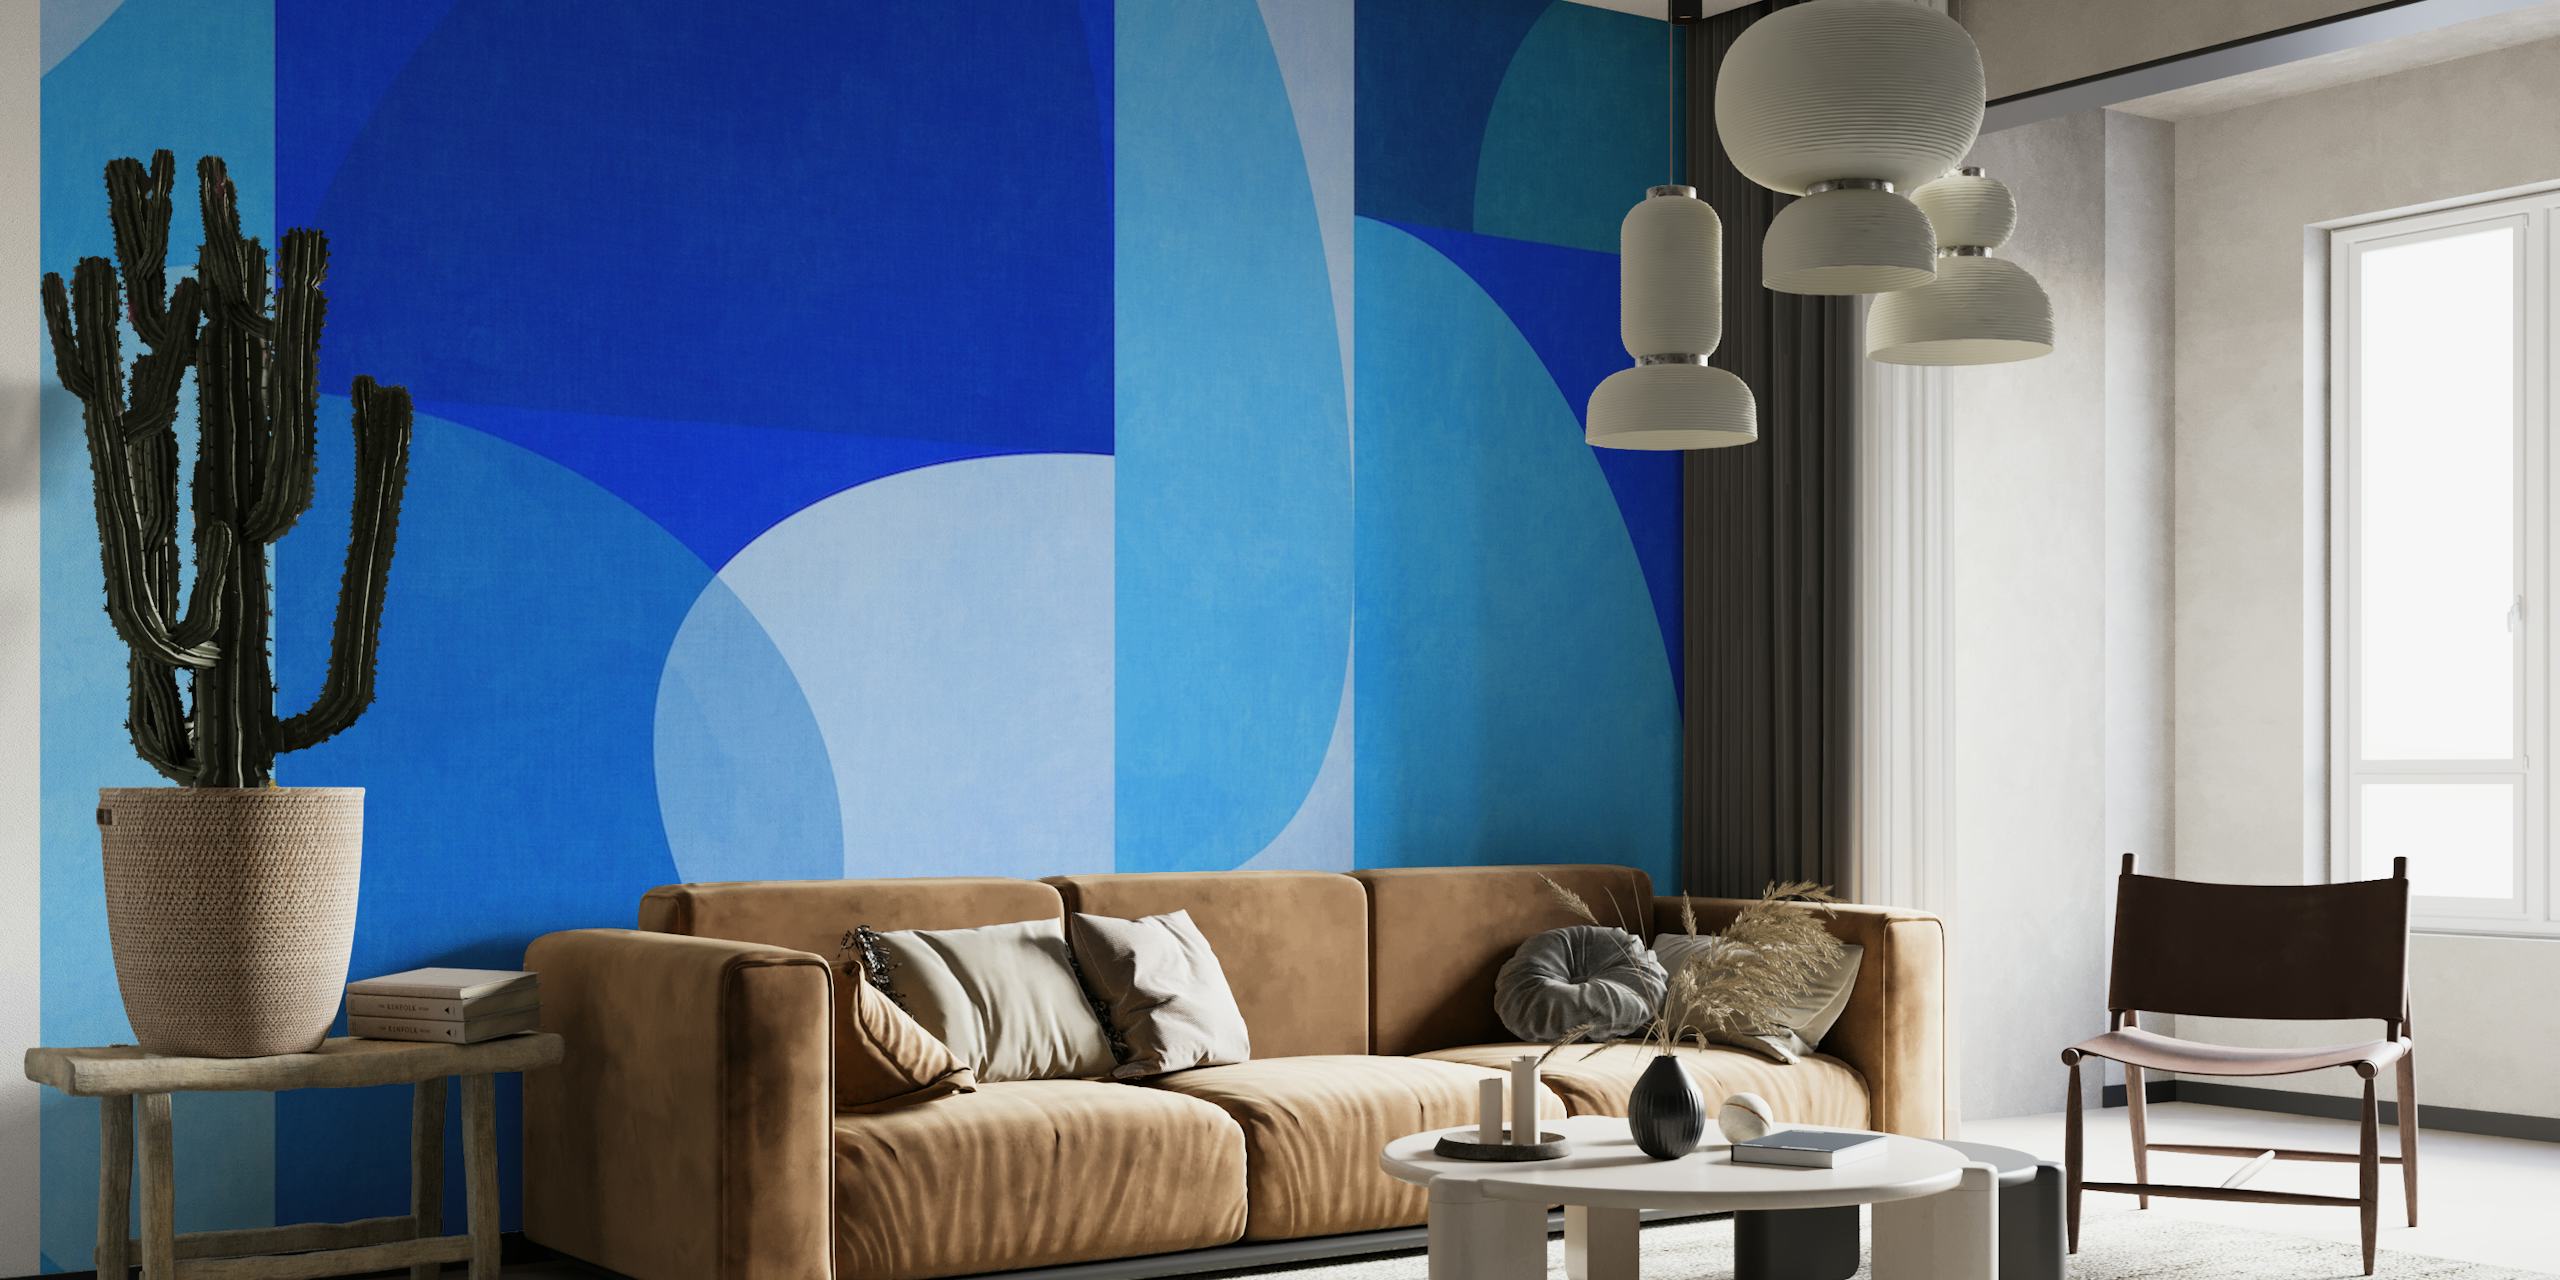 Fotomural abstracto de estilo moderno de mediados de siglo en tonos azules con formas geométricas